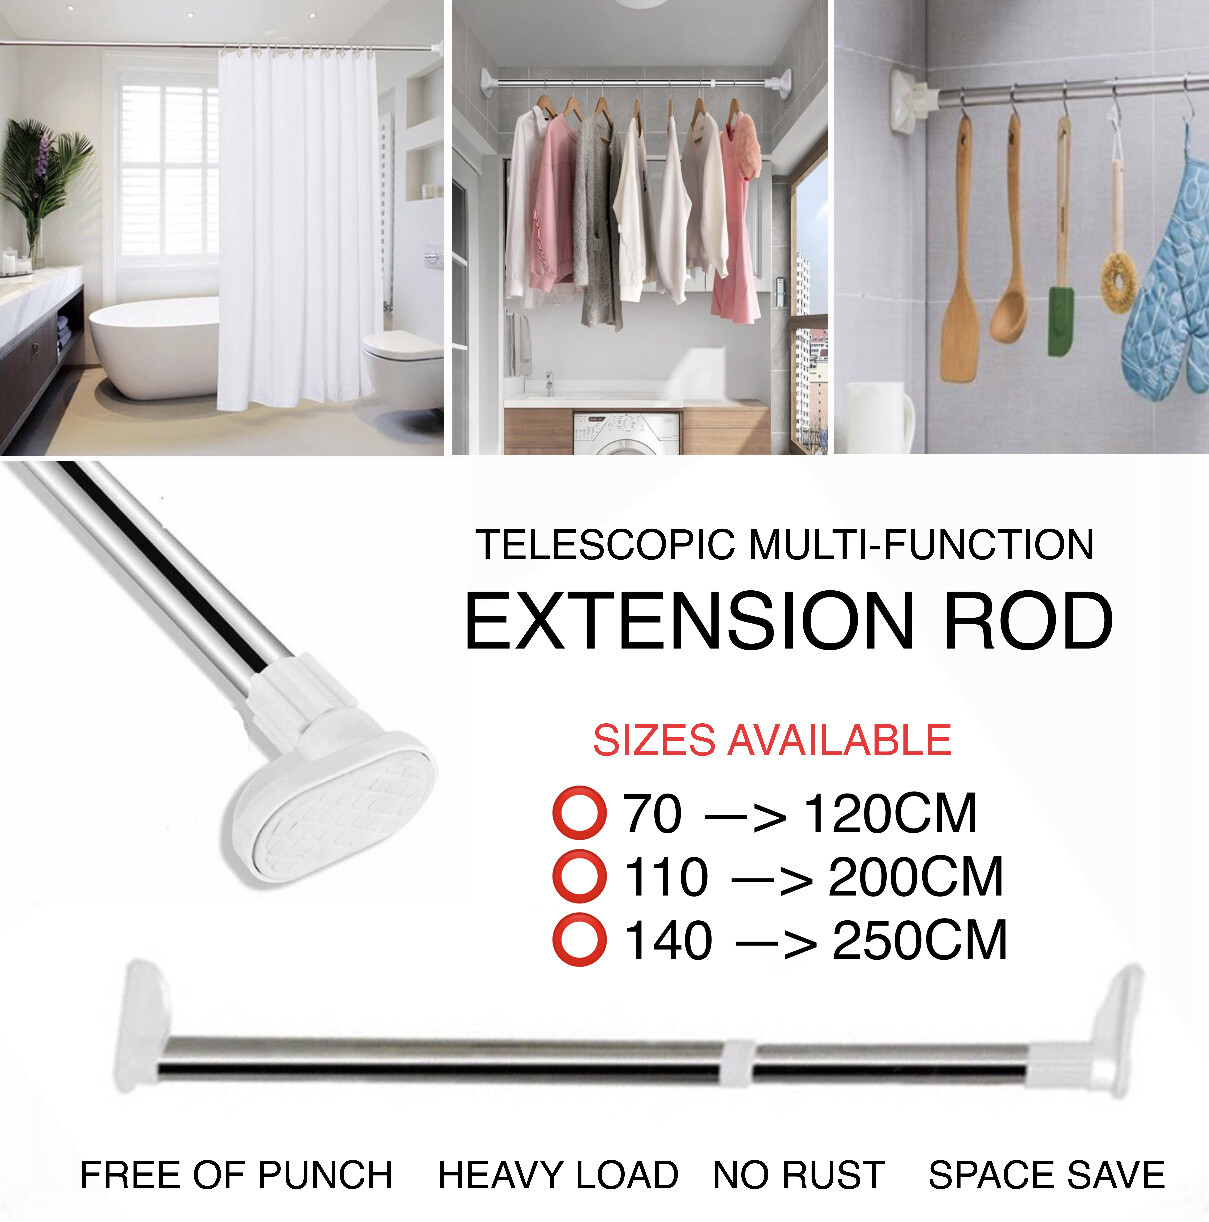 Extension Rod